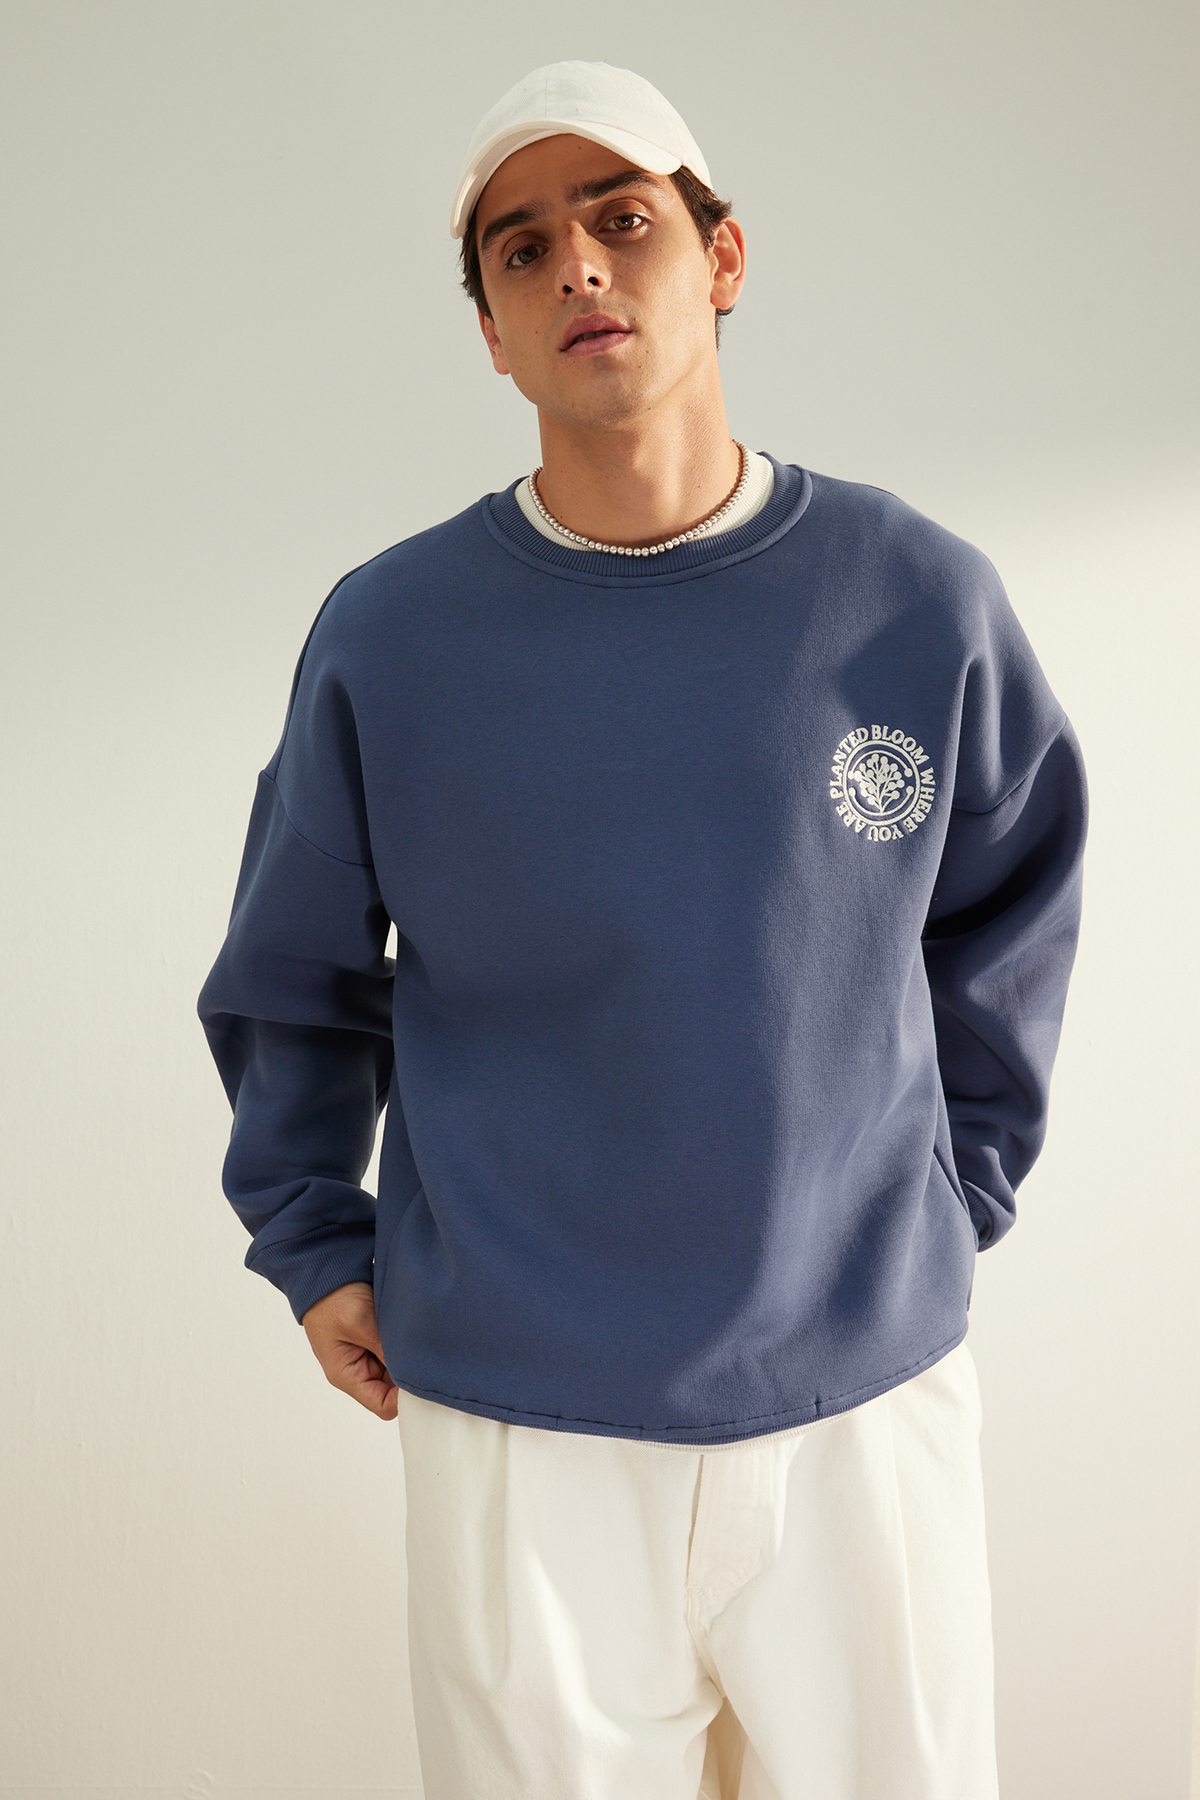 Trendyol Limited Edition Indigo Men's Oversize Embroidery Cotton Fleece Fleece Sweatshirt.